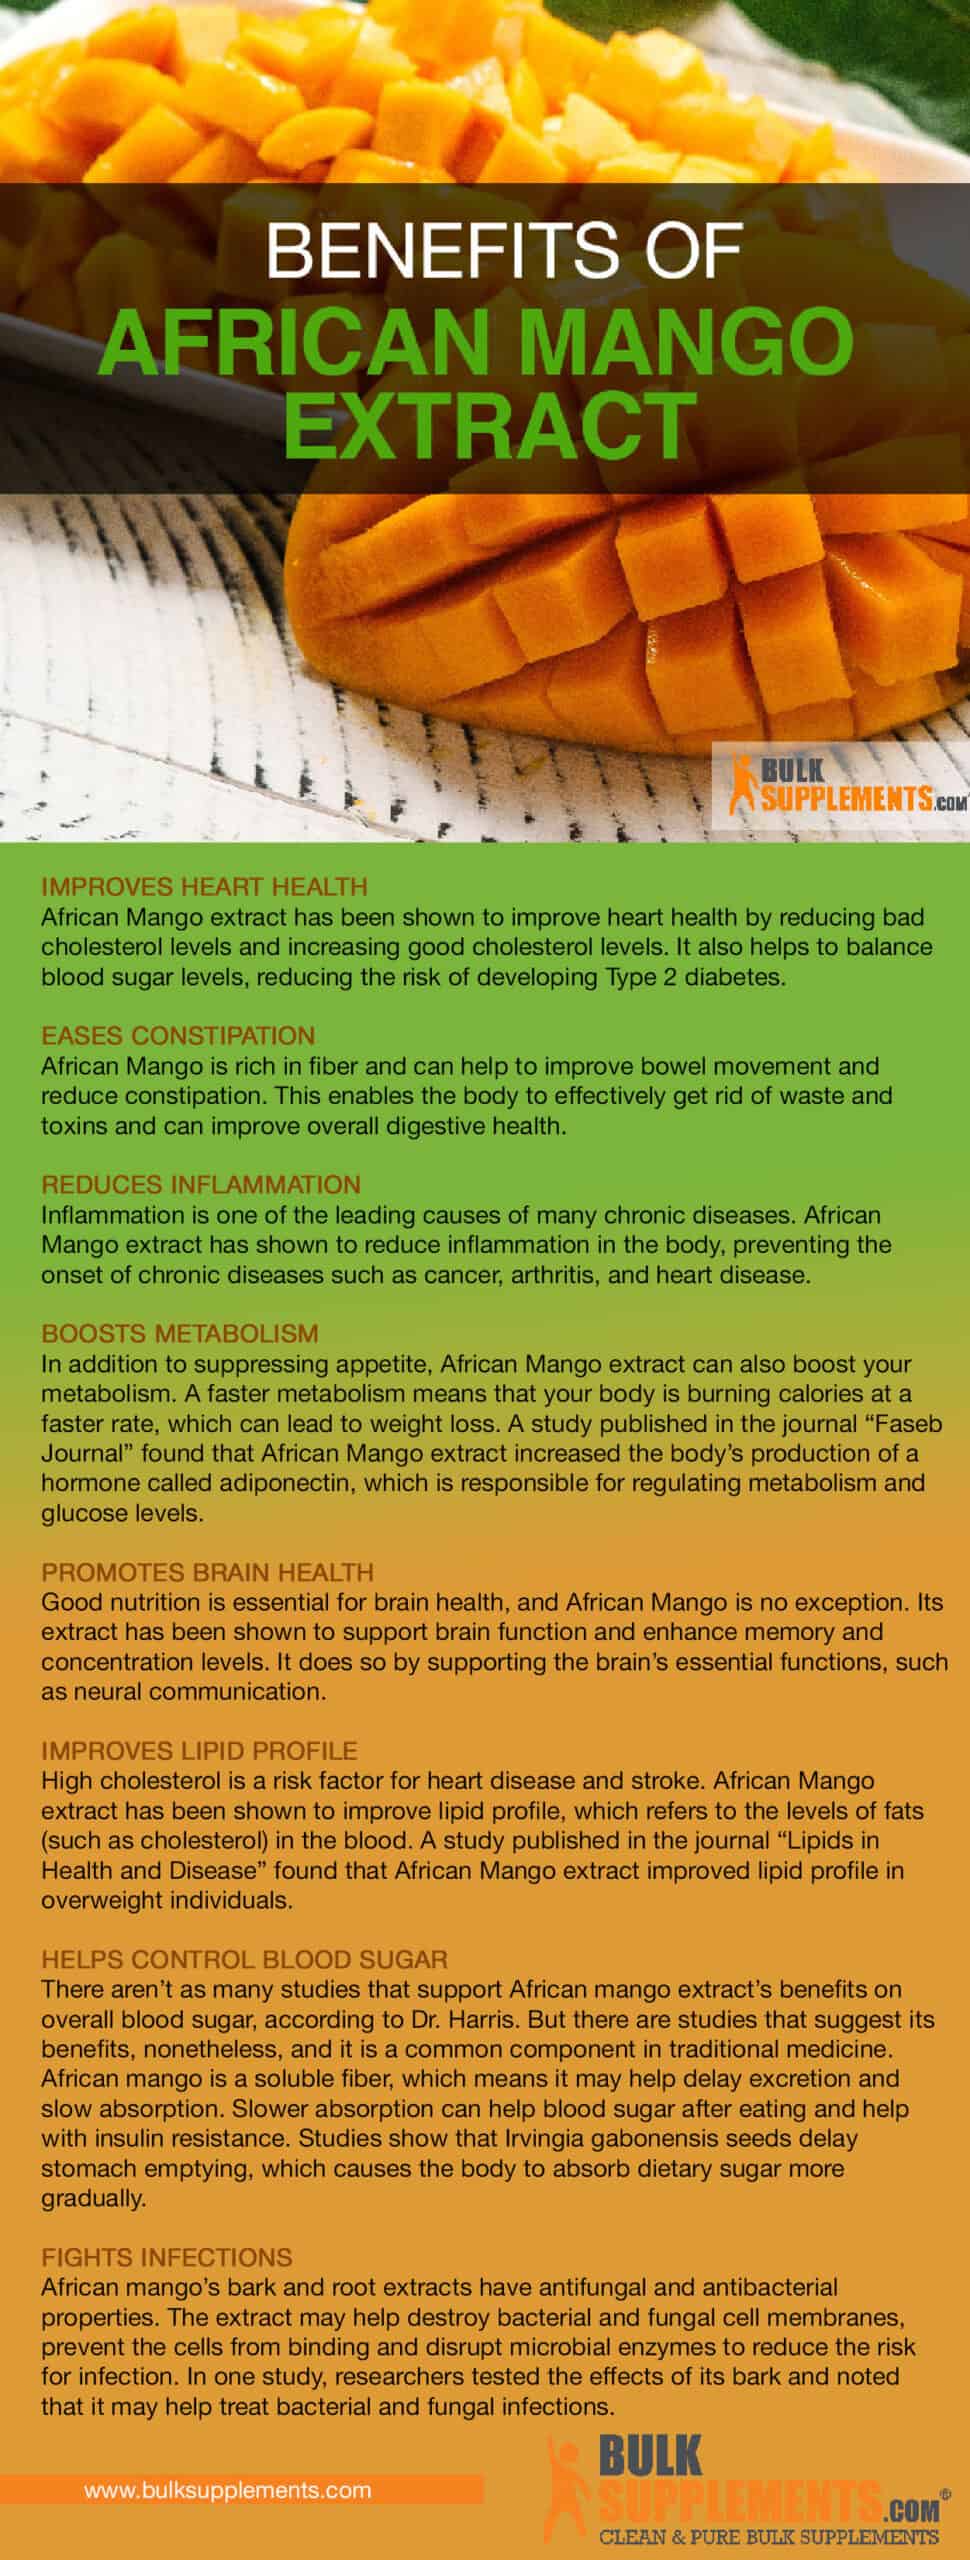 African mango extract and antioxidant properties